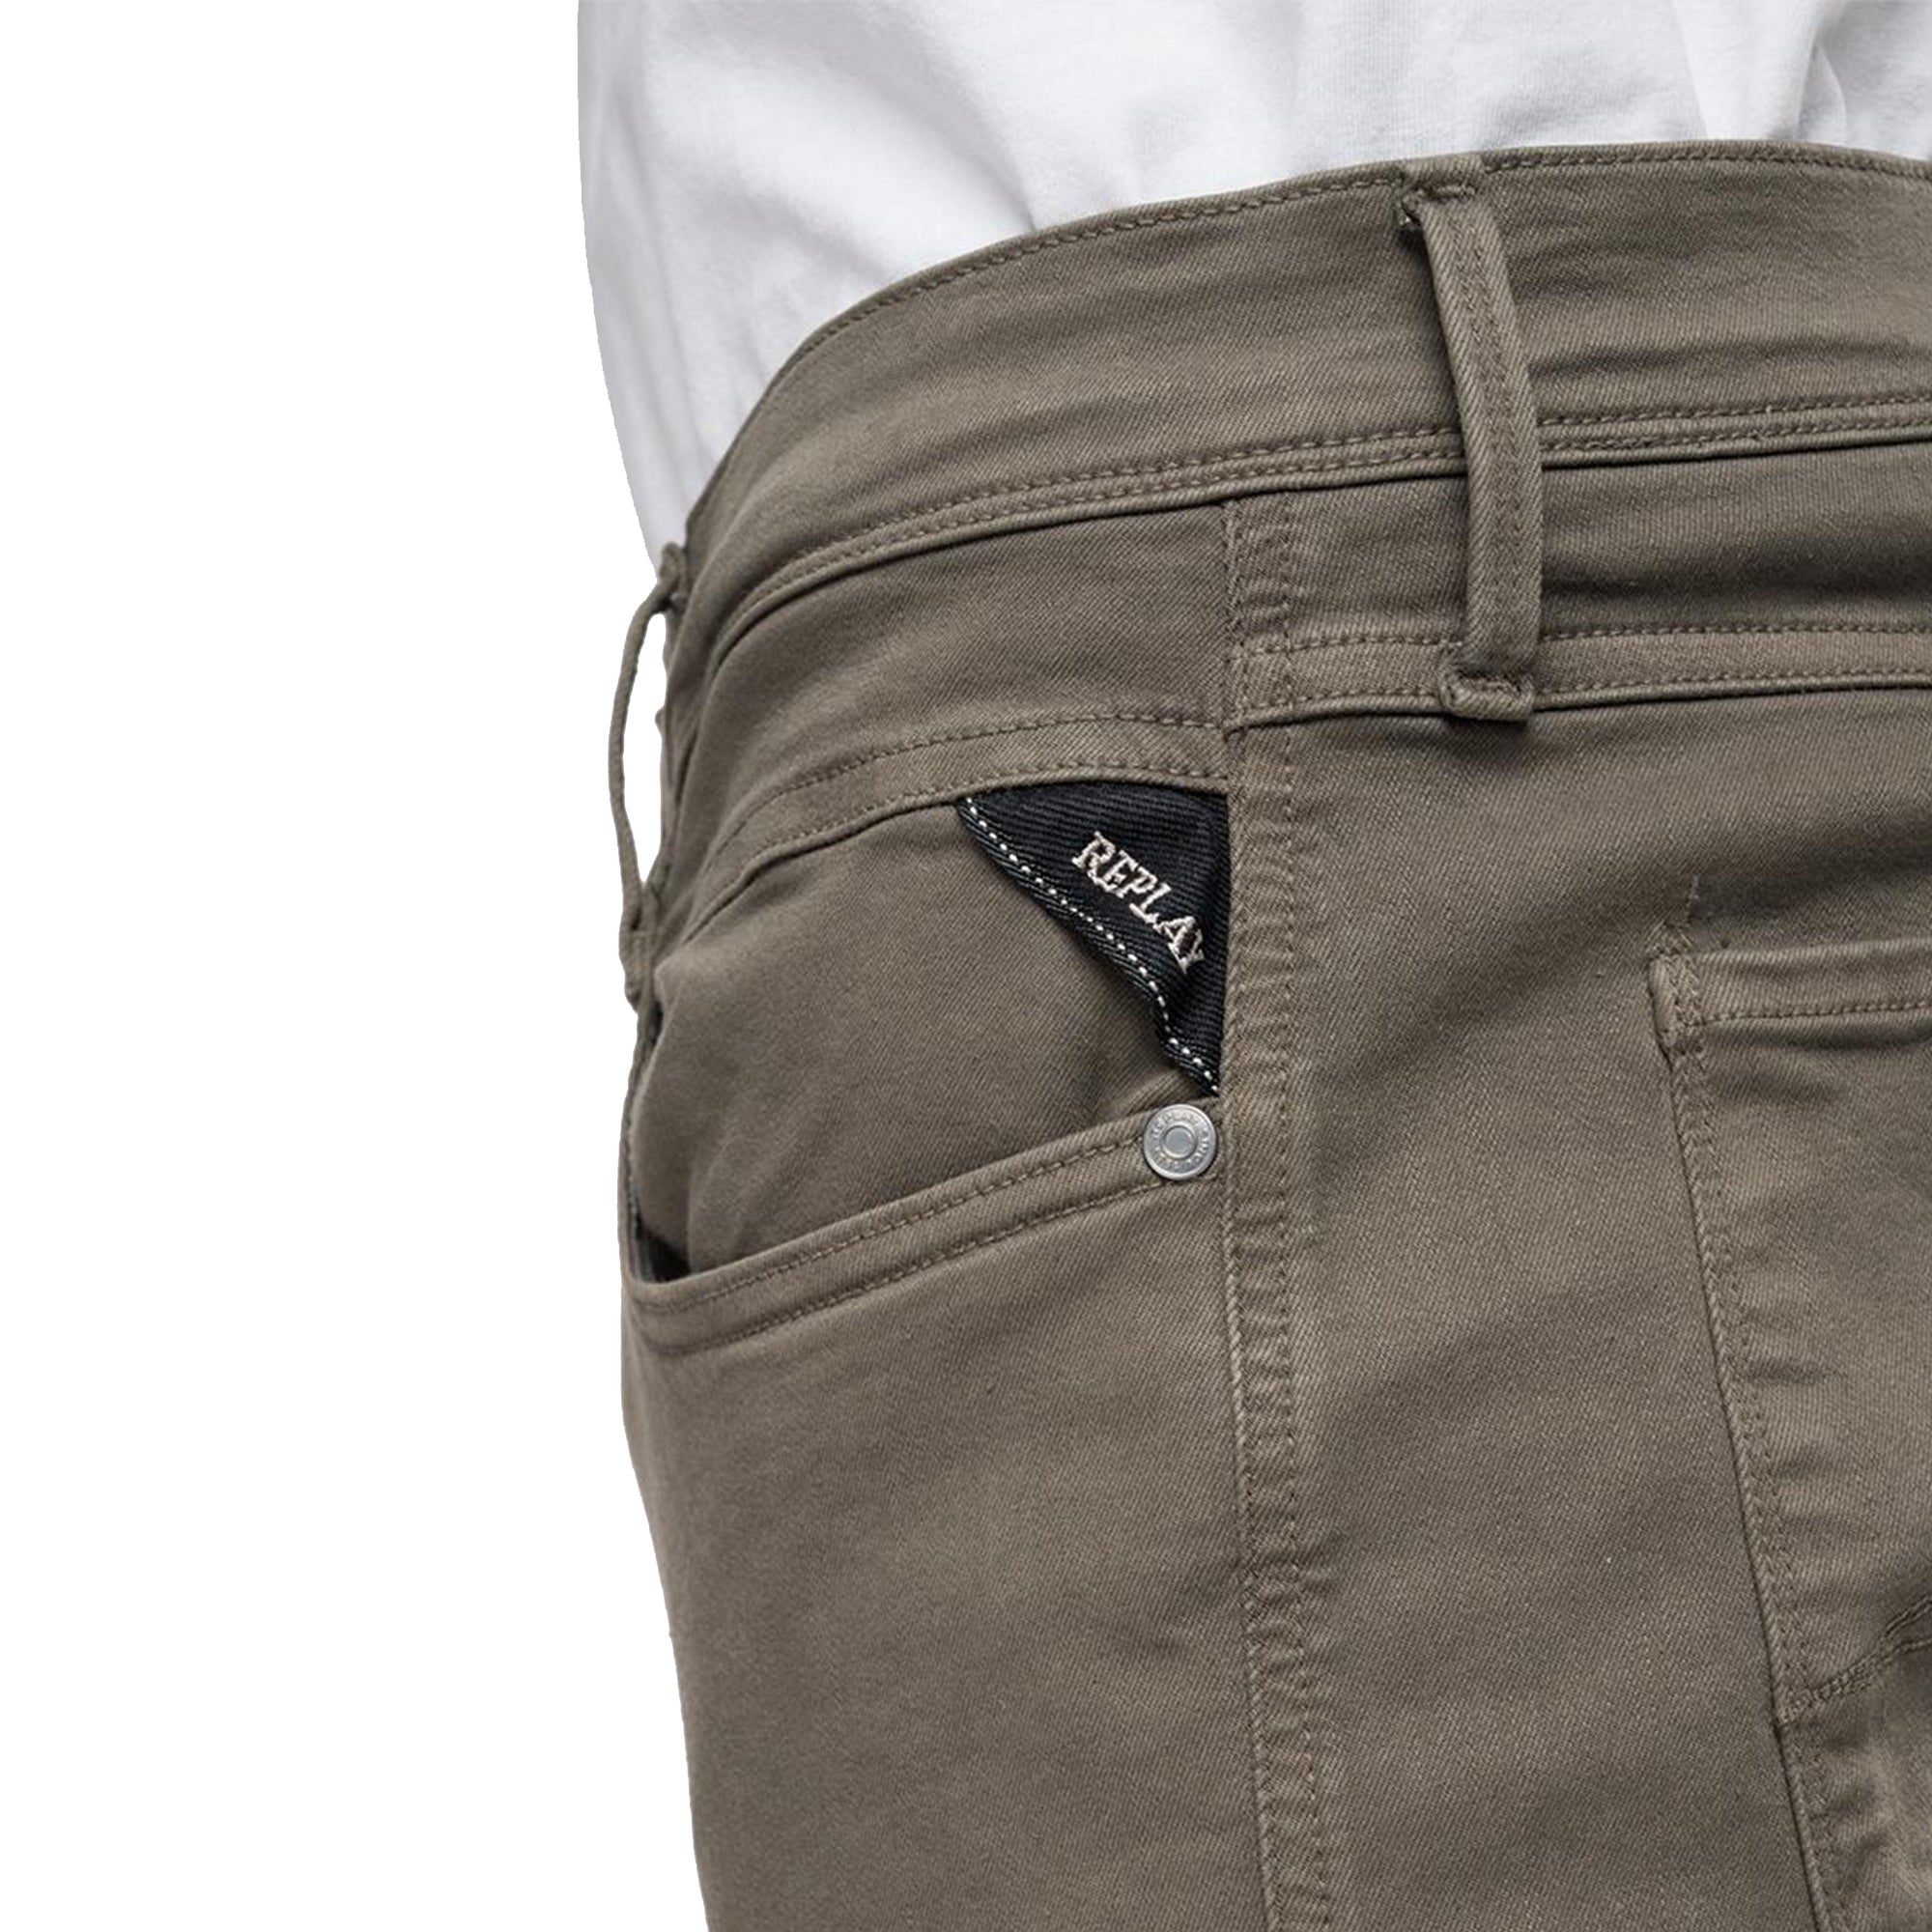 Replay Hyperflex X-Lite Anbass Colour Edition Slim Fit Jeans - Army